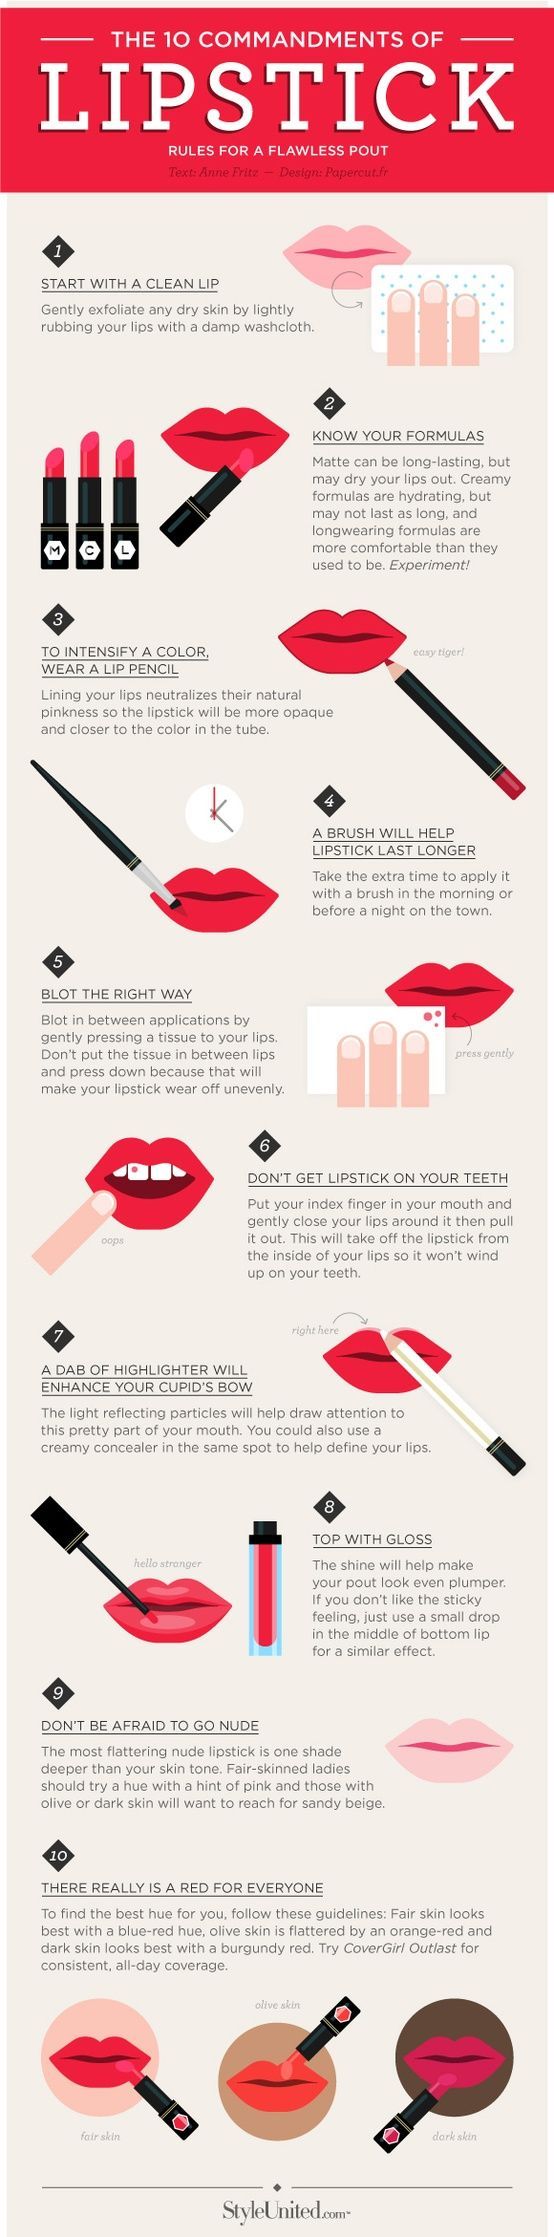 10 commandments of lipstick.